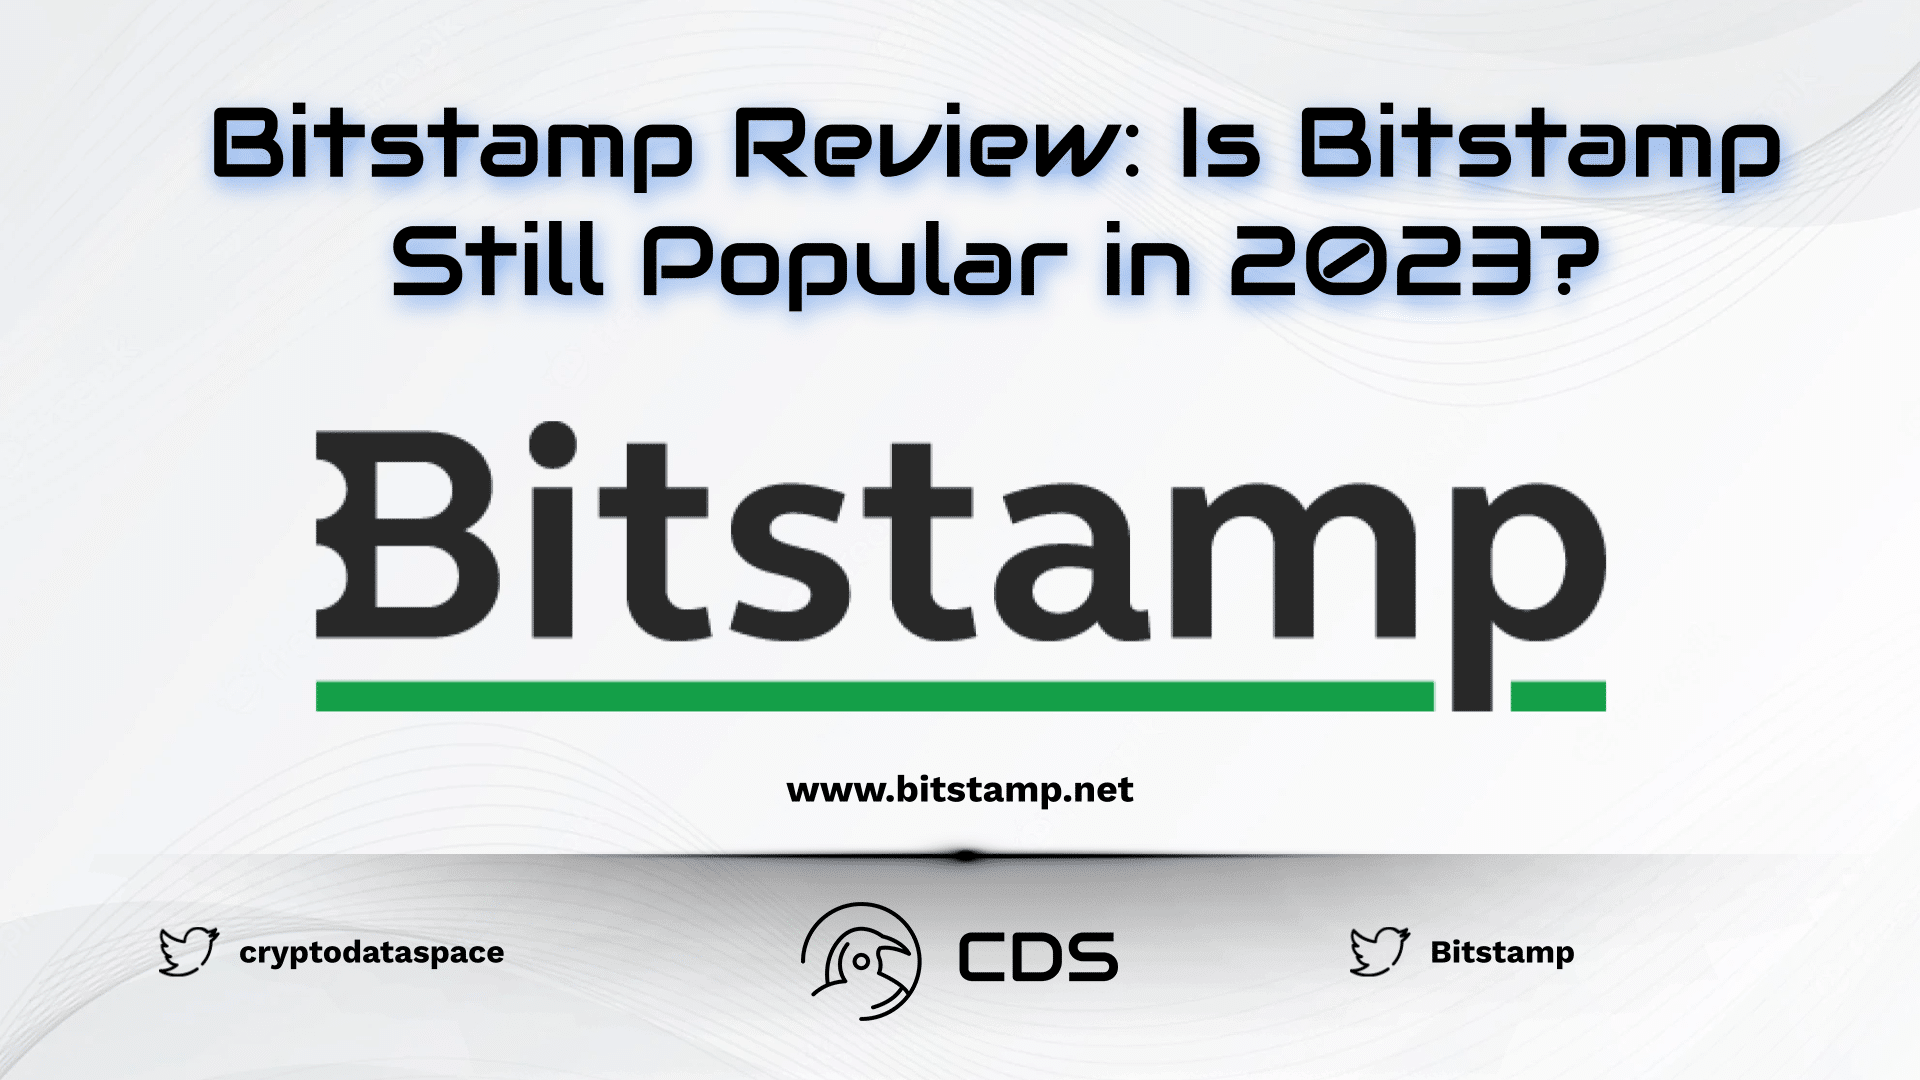 Bitstamp Review Is Bitstamp Still Popular in 2023